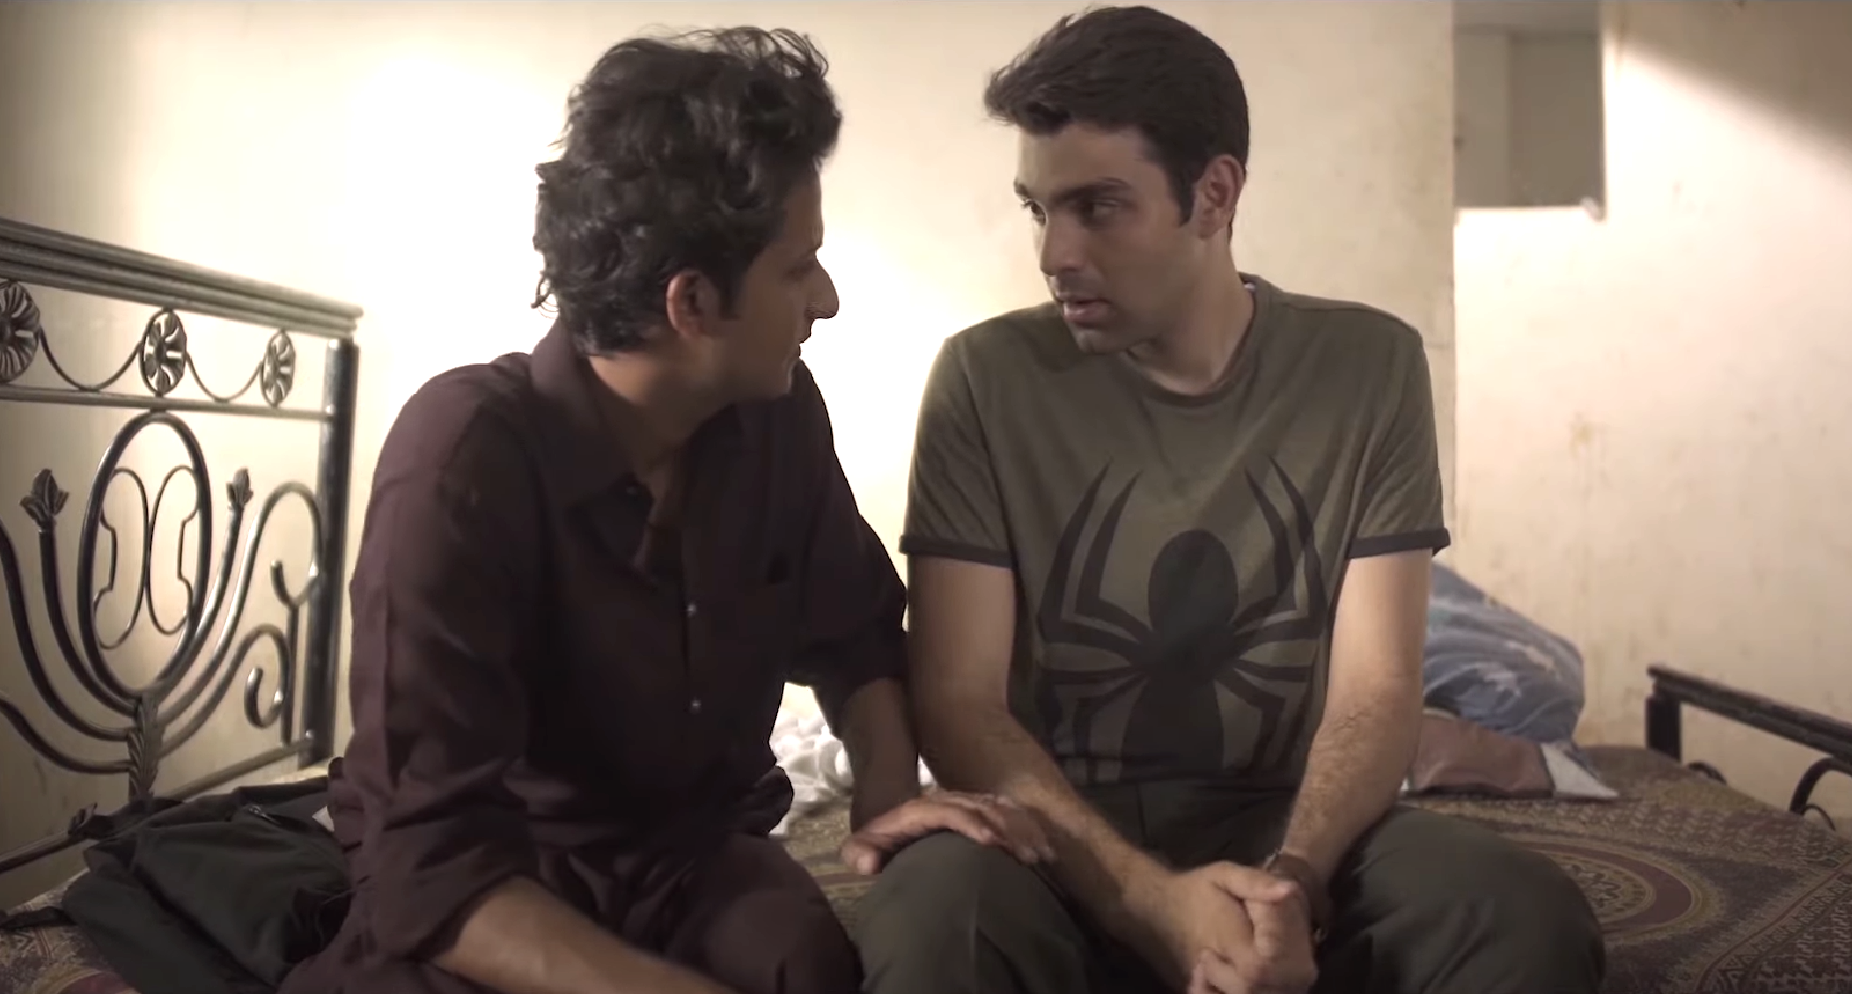 Award-winning Pakistani LGBTQ short film takes unflinching look at gay life  in South Asia - Attitude